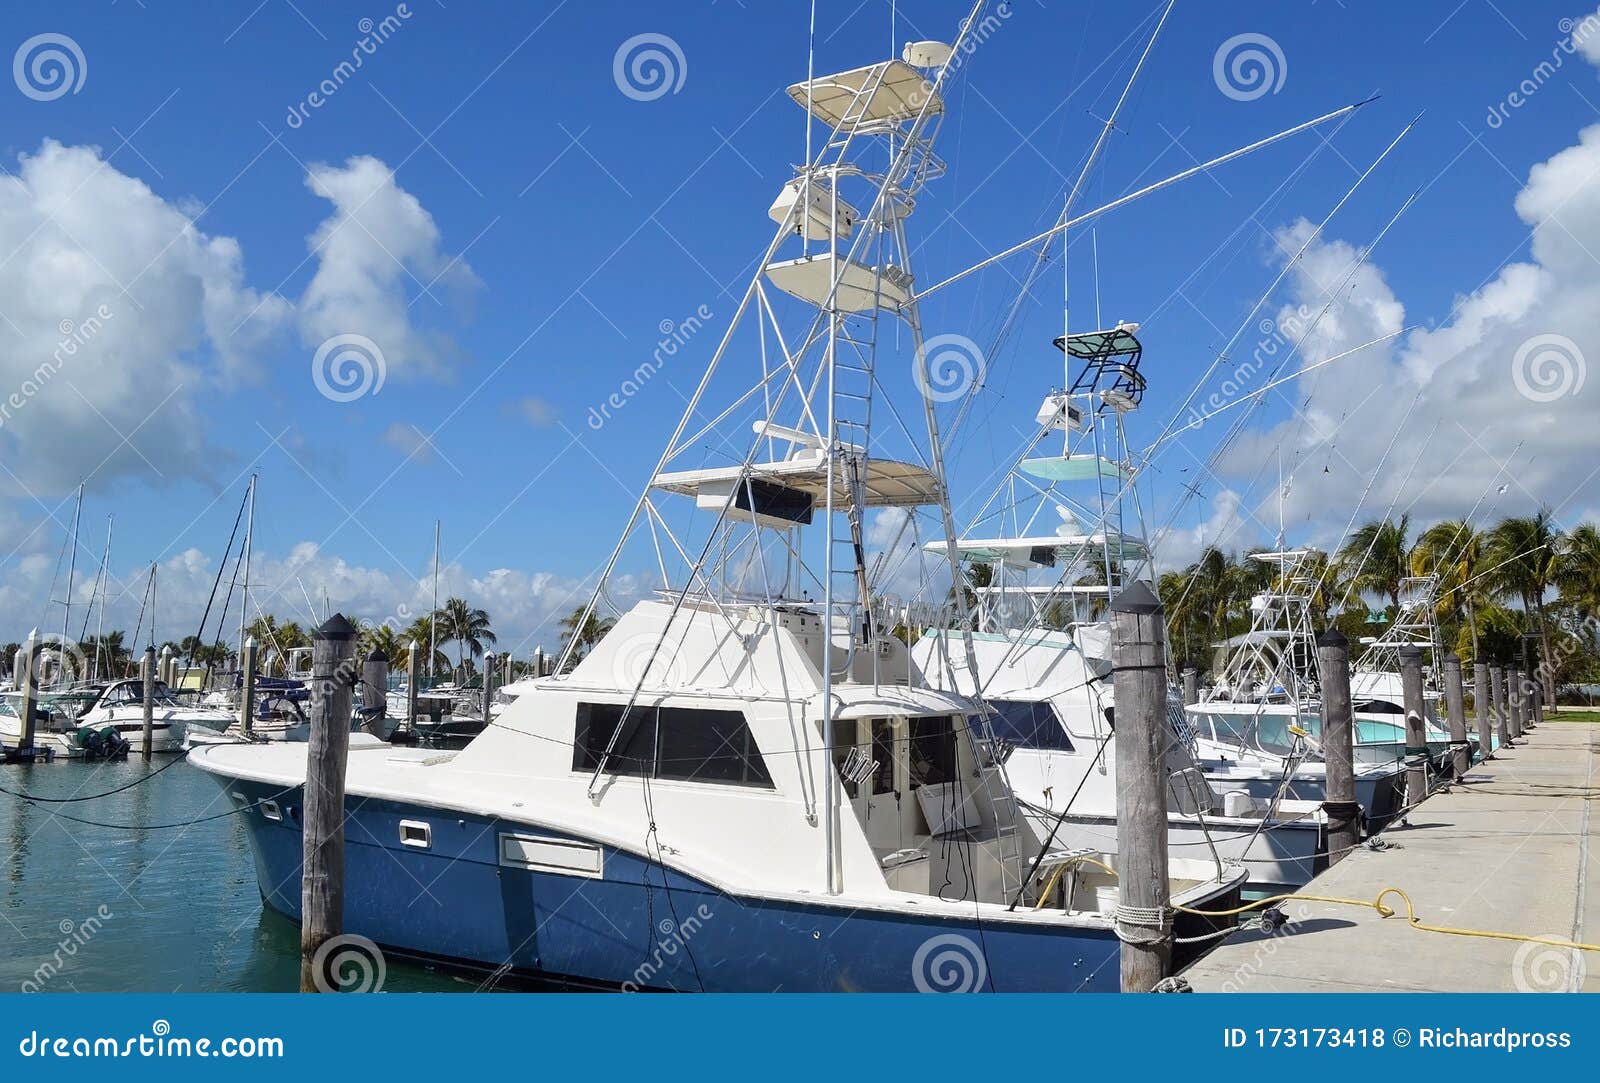 https://thumbs.dreamstime.com/z/charter-fishing-boats-docked-marina-key-biscayne-florida-popular-venue-week-end-sportsmen-charter-sport-fishing-173173418.jpg